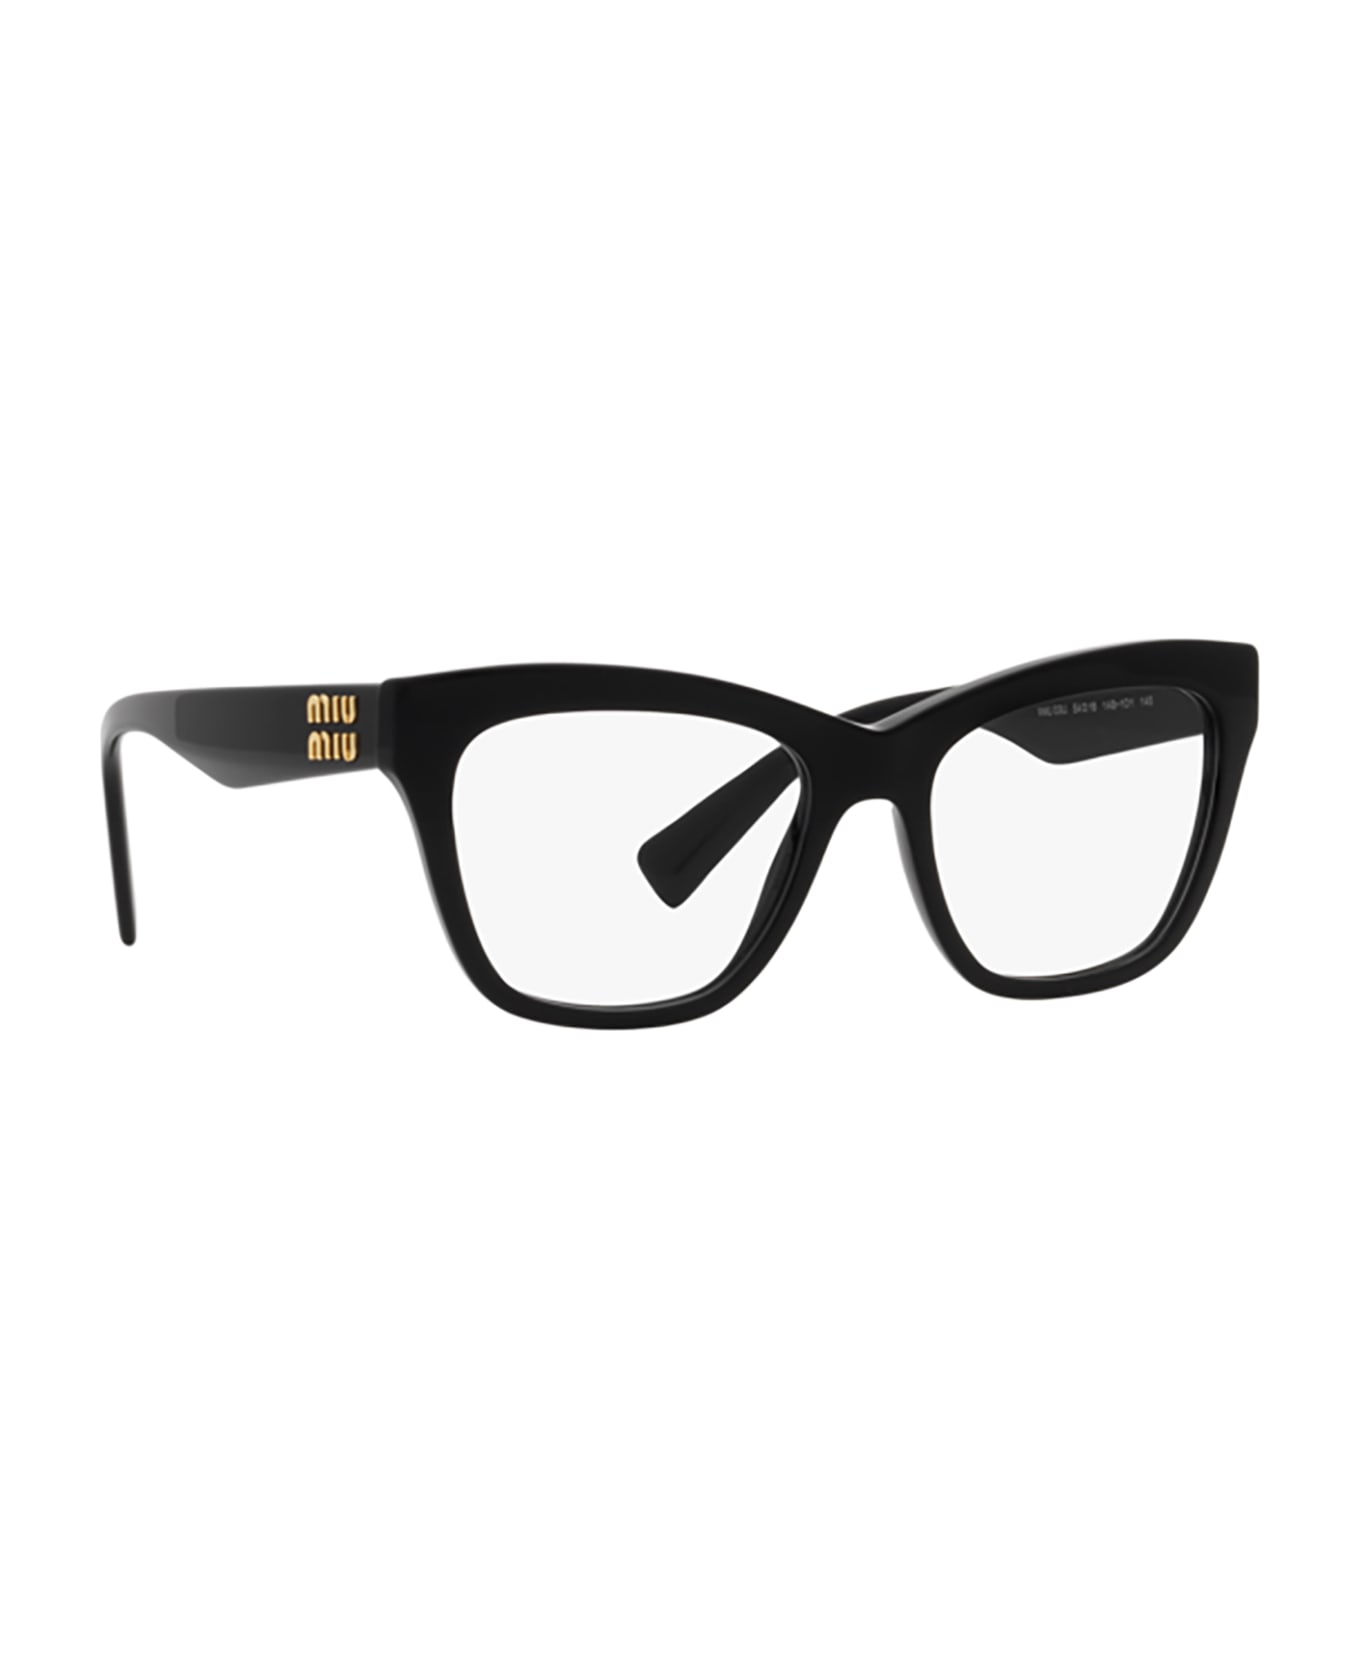 Miu Miu Eyewear Mu 03uv Black Glasses - Black